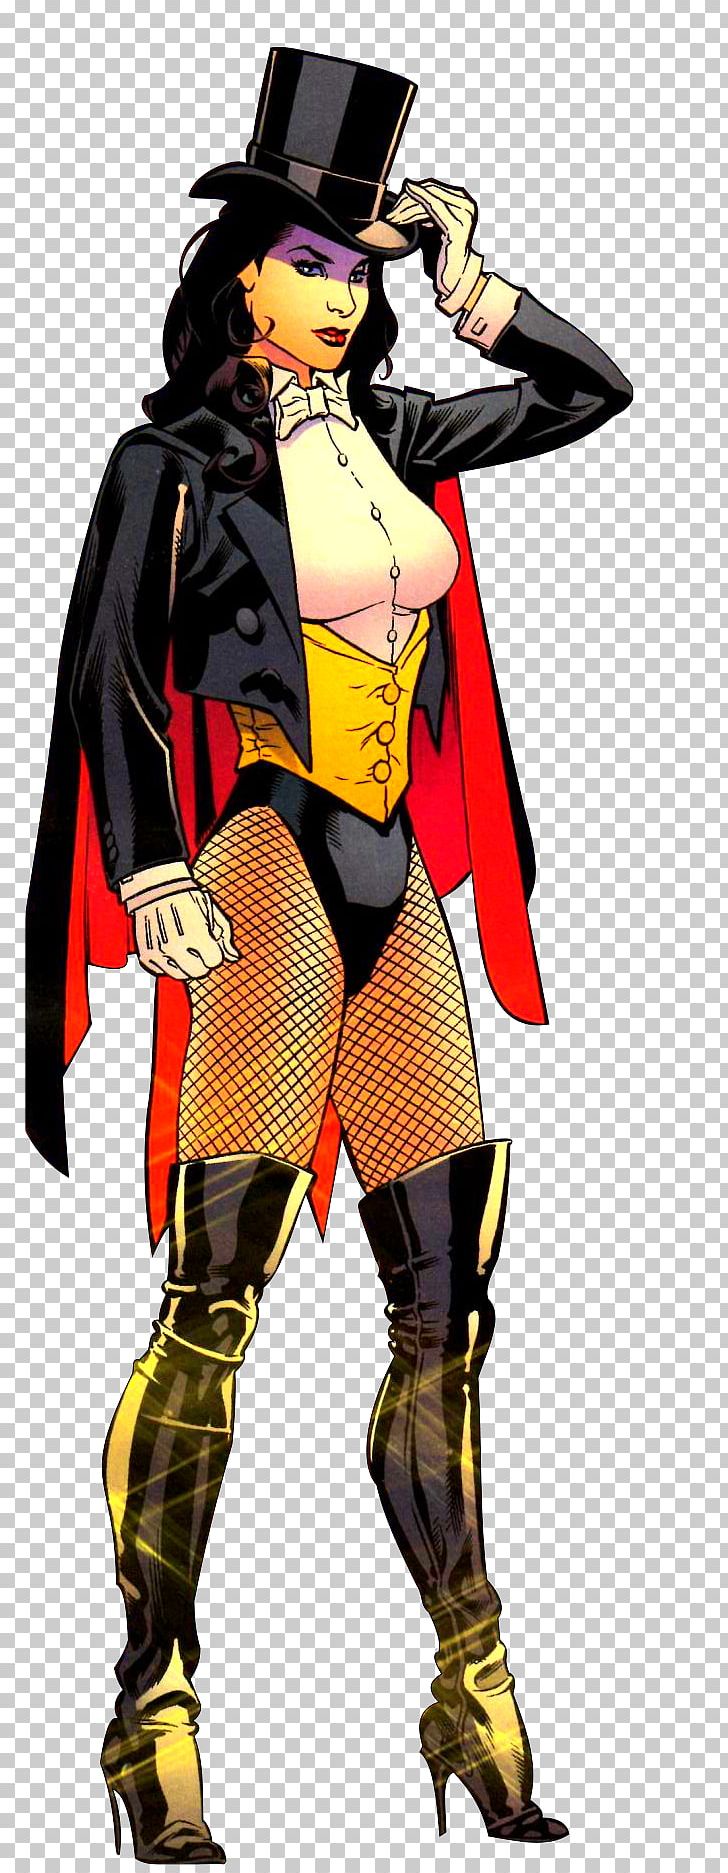 Injustice: Gods Among Us Zatanna Raven DC Comics PNG, Clipart, Cartoon, Comic Book, Comics, Costume, Costume Design Free PNG Download